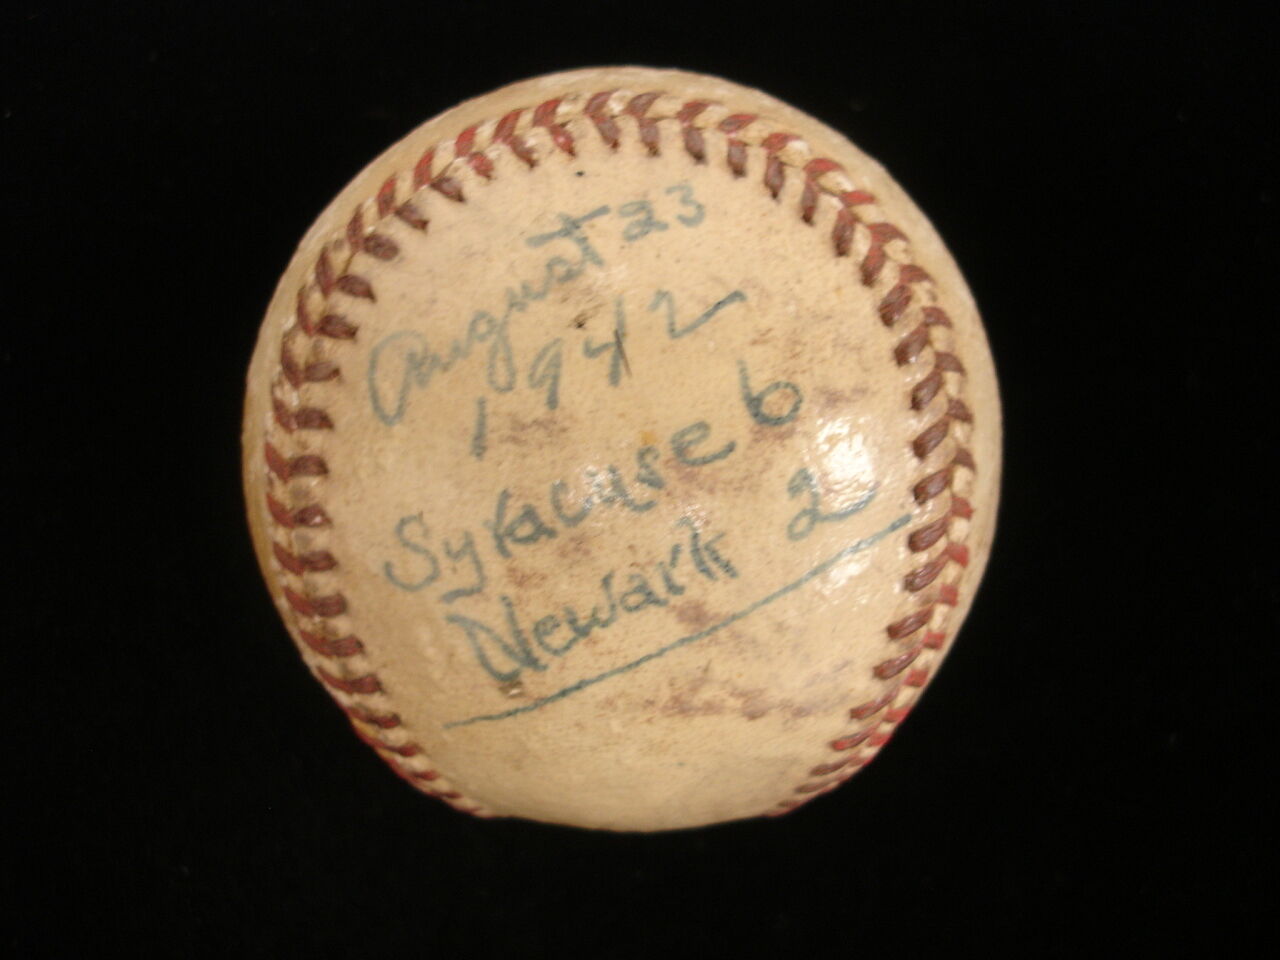 Nate Andrews Game Used 1942 Syracuse Chiefs International League Baseball - LOA